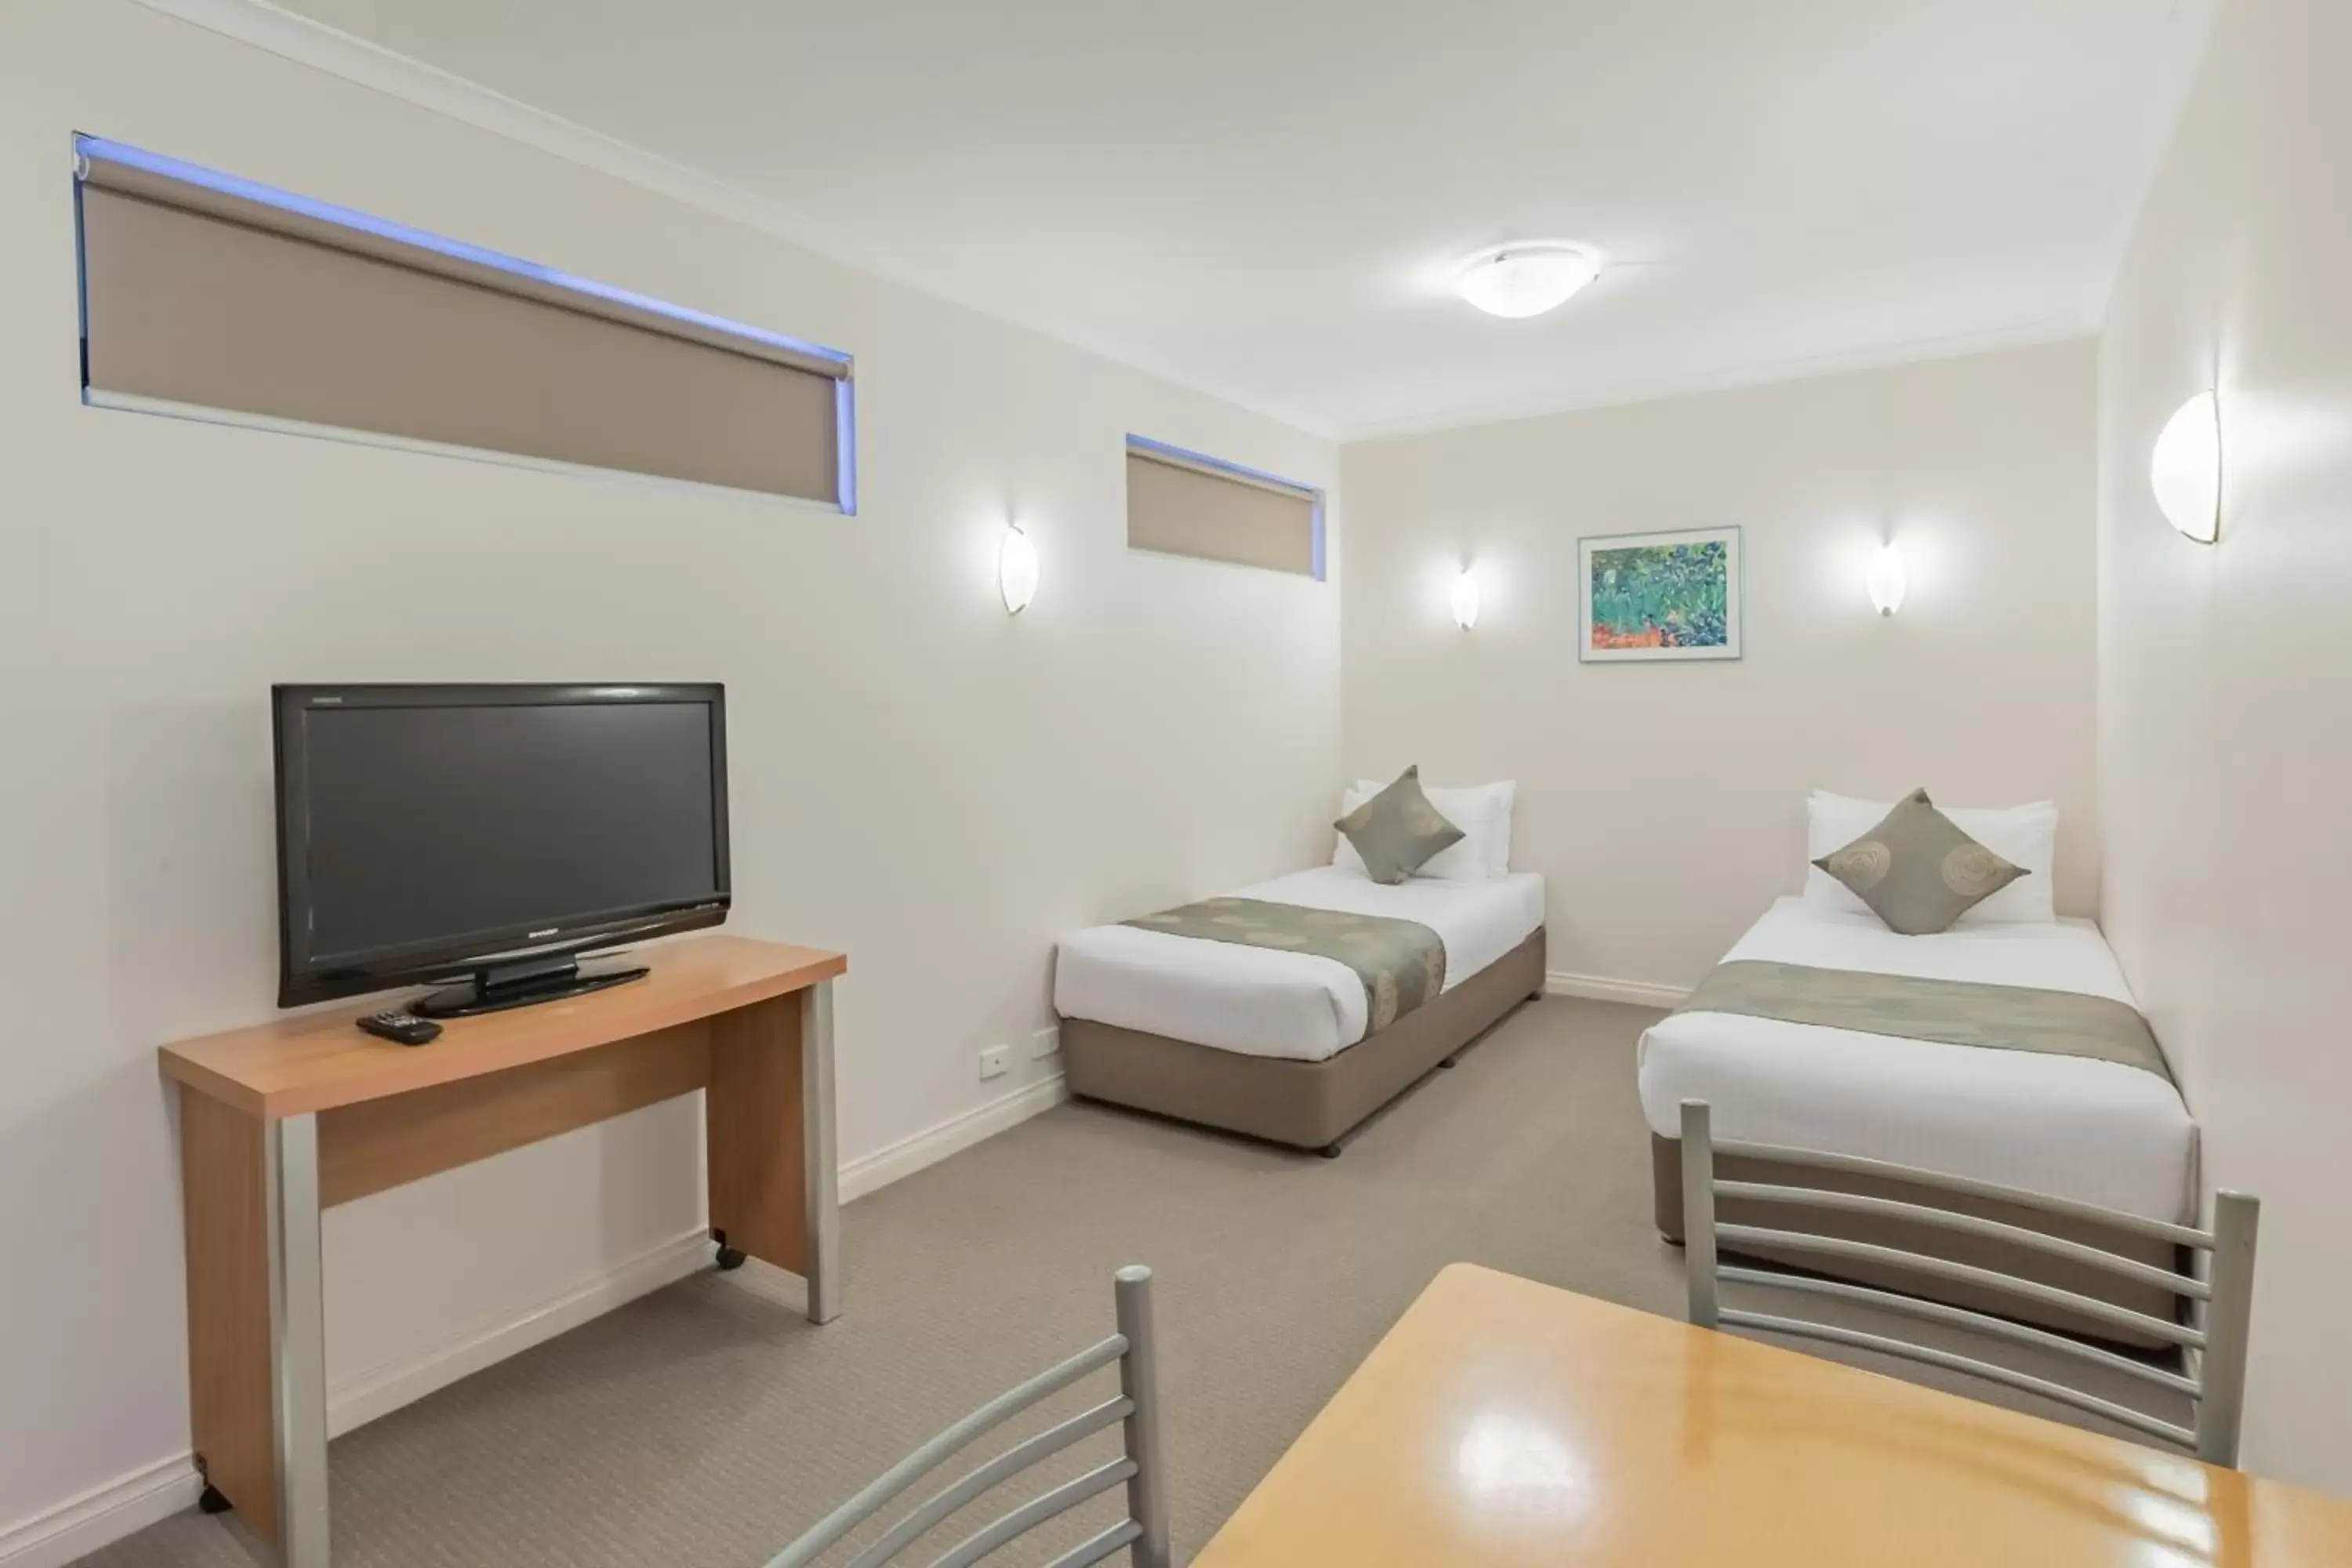 Bedroom, Room Photo in The Waverley International Hotel